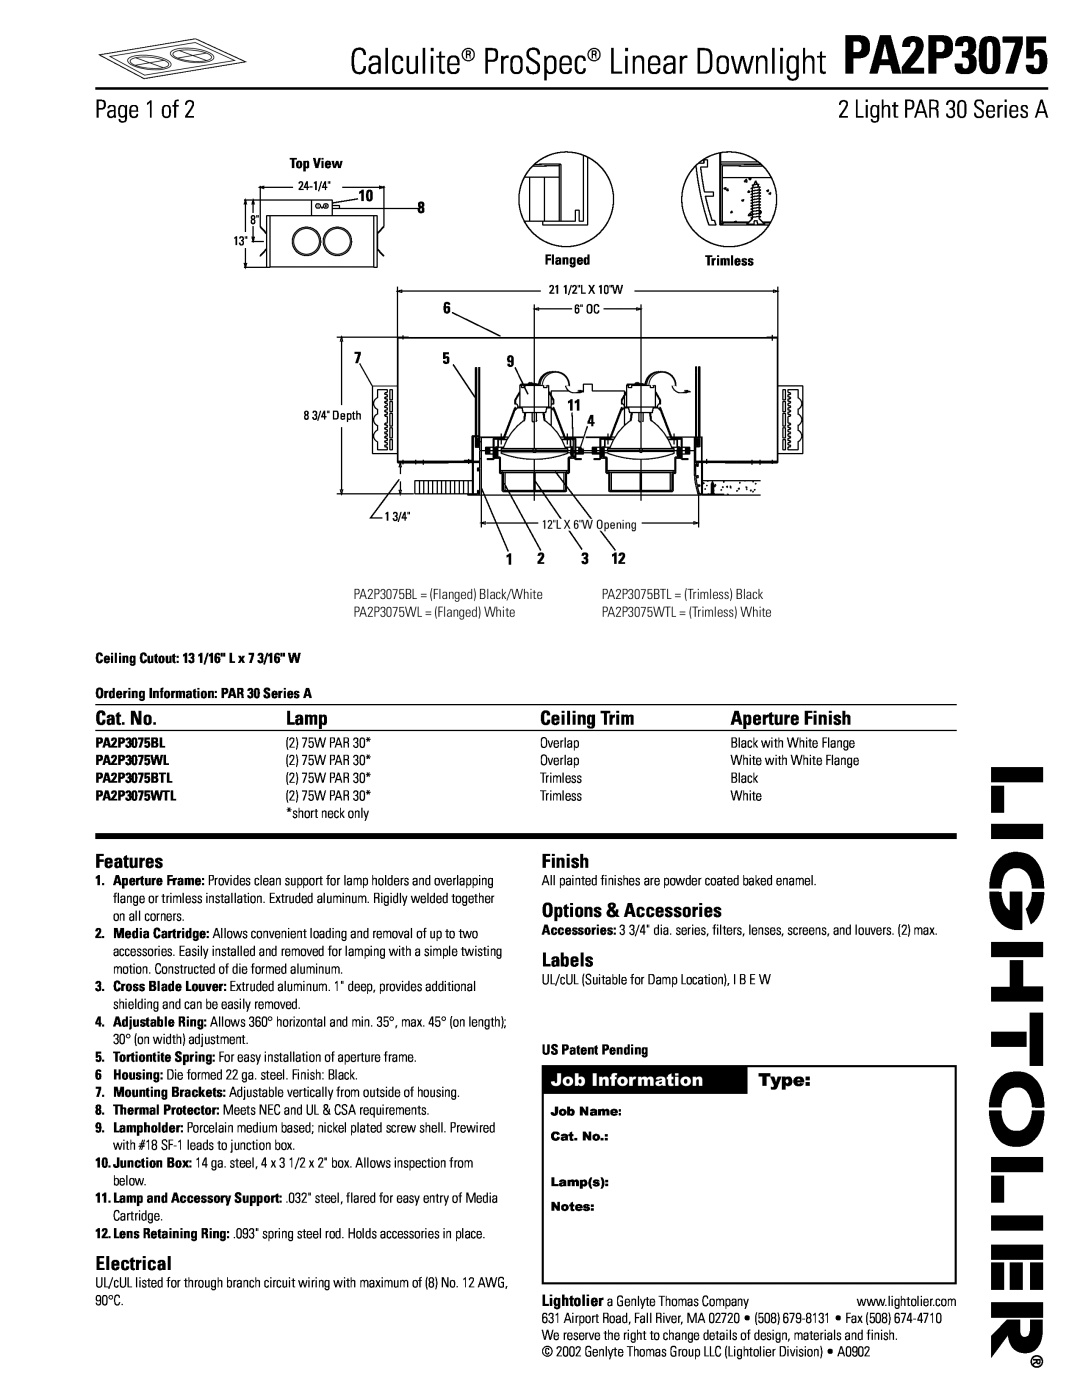 Lightolier PA2P3075 manual Page 1 of, Light PAR 30 Series A, Cat. No, Lamp, Ceiling Trim, Aperture Finish, Features, Type 